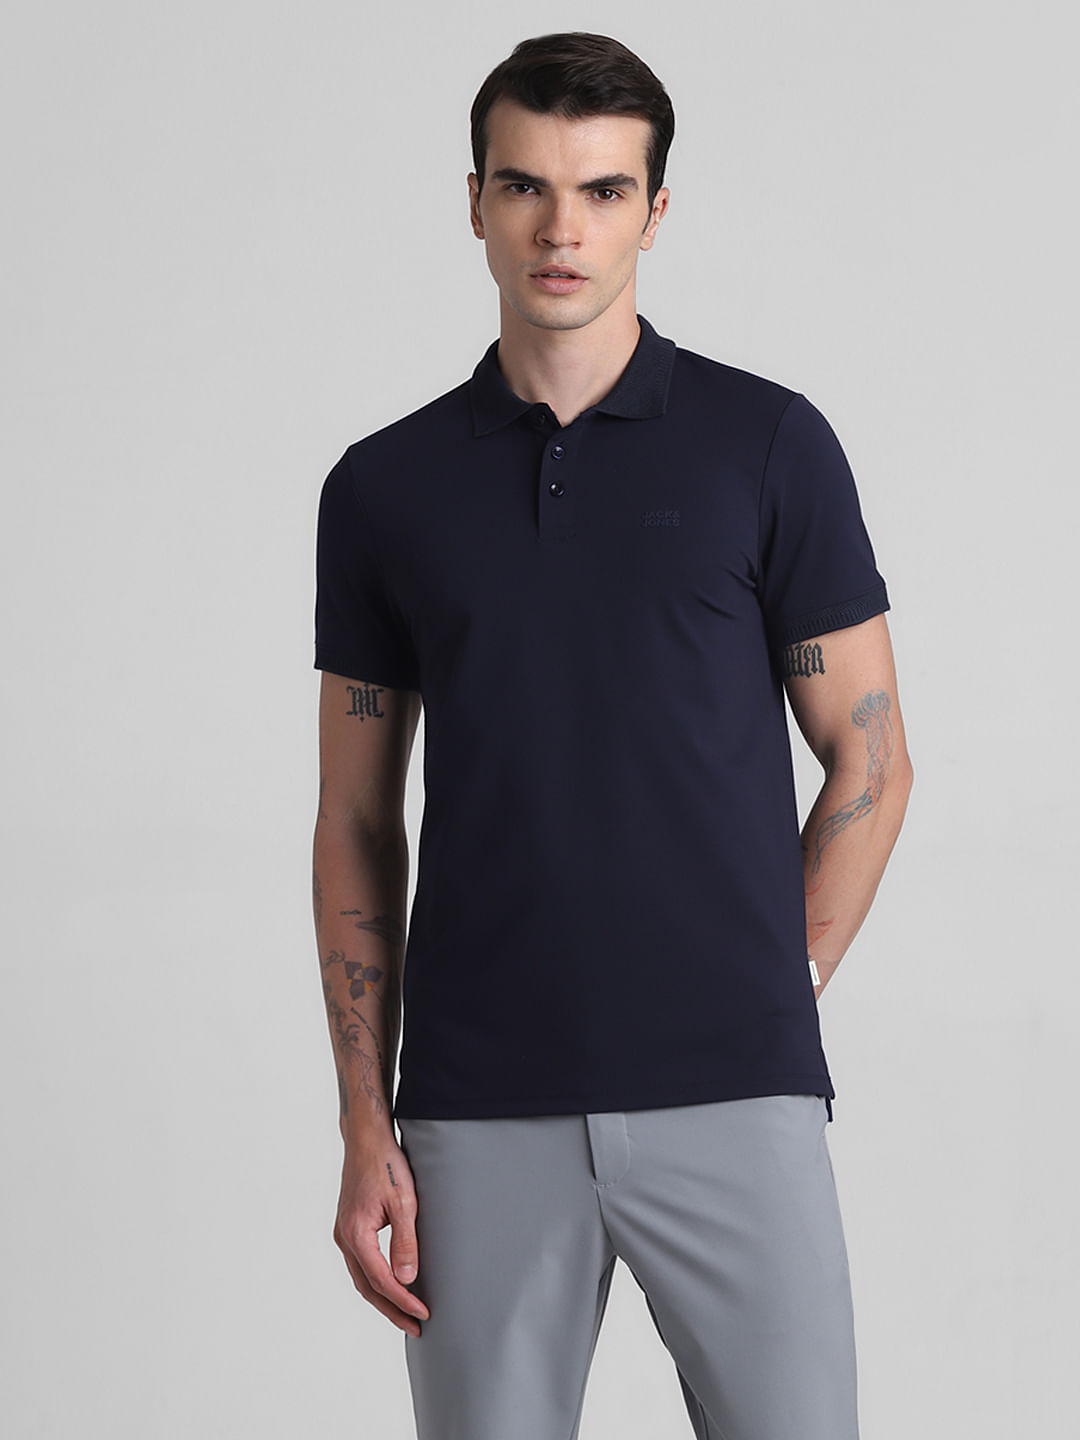 Men's Guide to Matching Pant Shirt Color Combination - LooksGud.com | Blue  shirt combination, Blue shirt men, Shirt outfit men